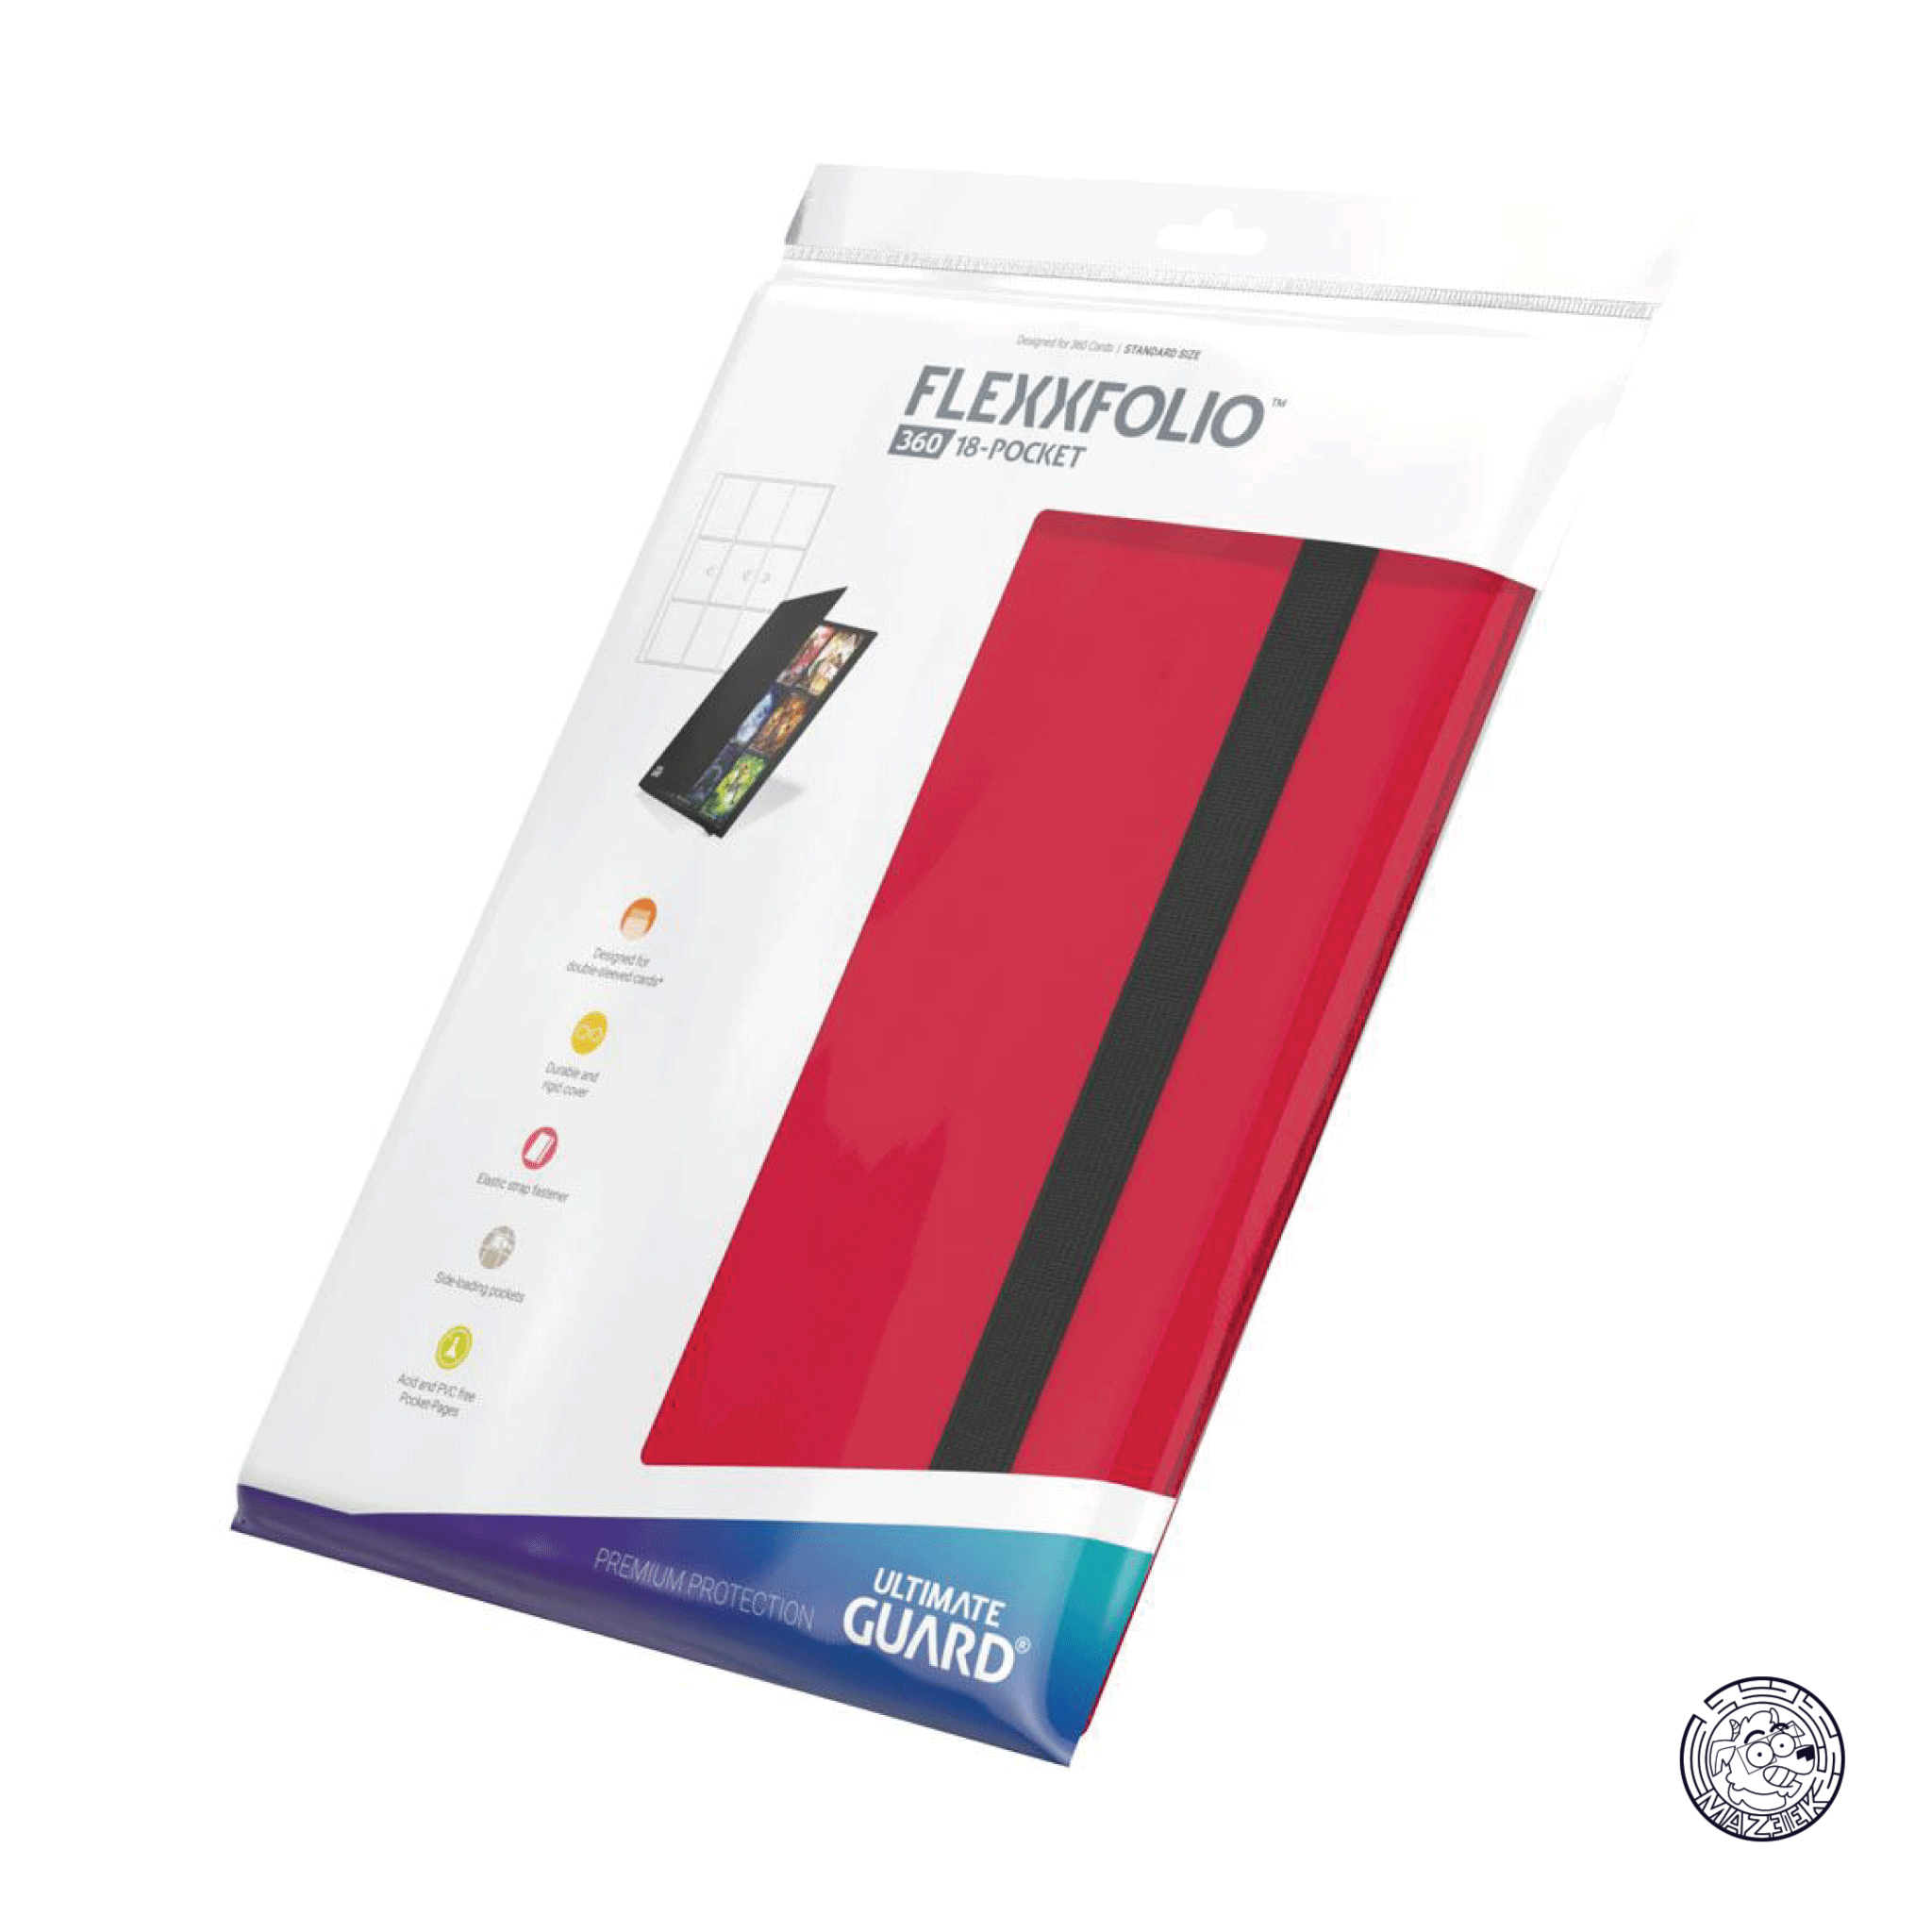 Ultimate Guard - Flexxfolio 360 - 18-Pocket (Red)